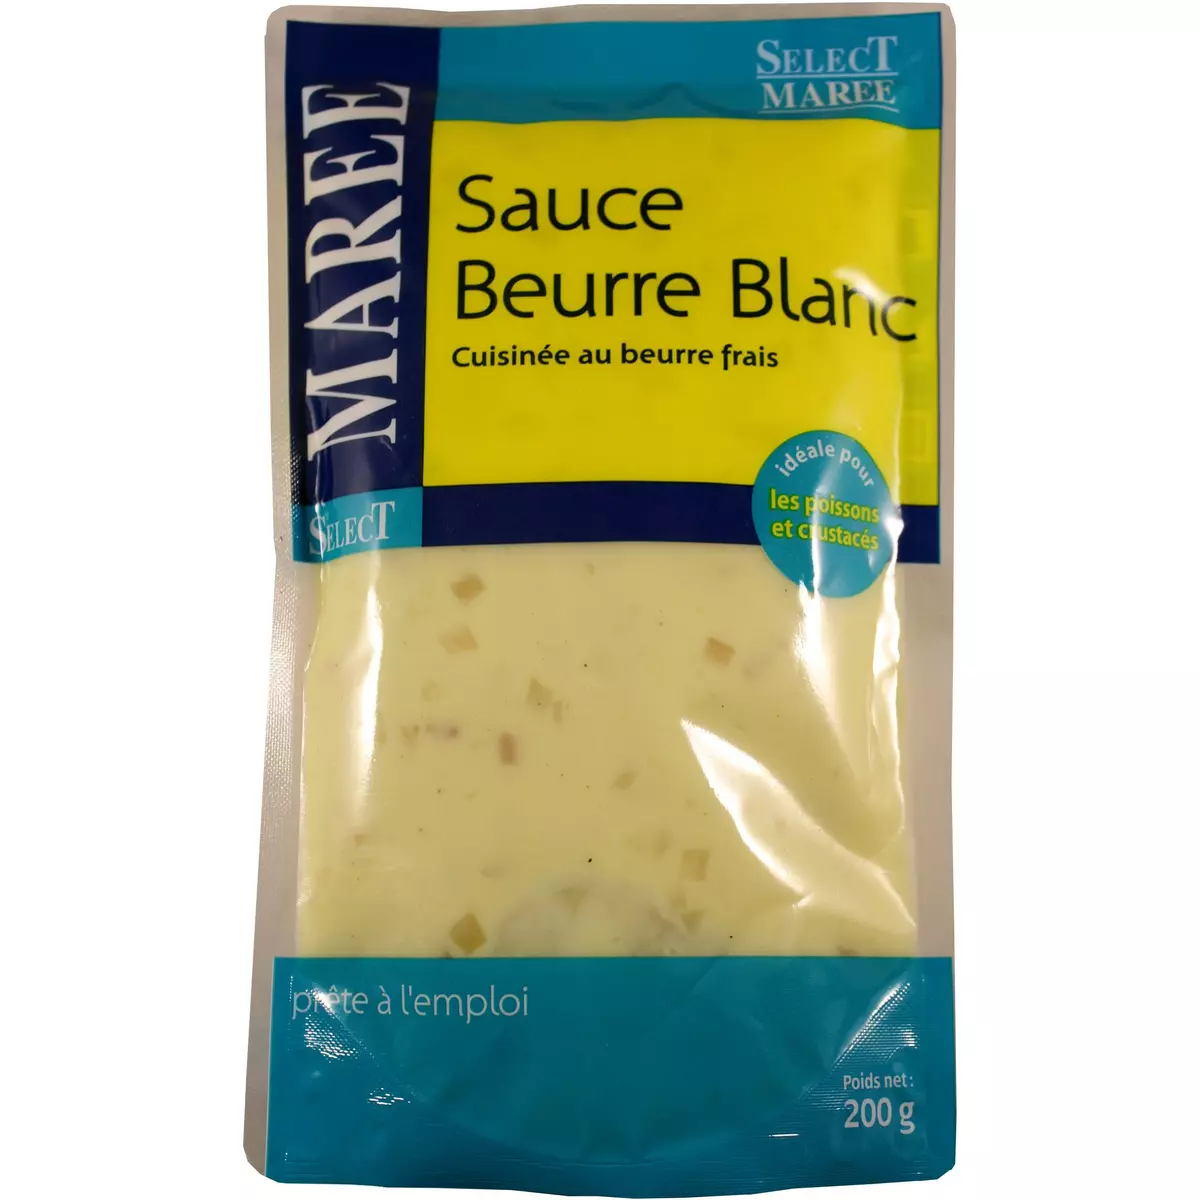 SELECT MAREE Sauce au beurre blanc 200g